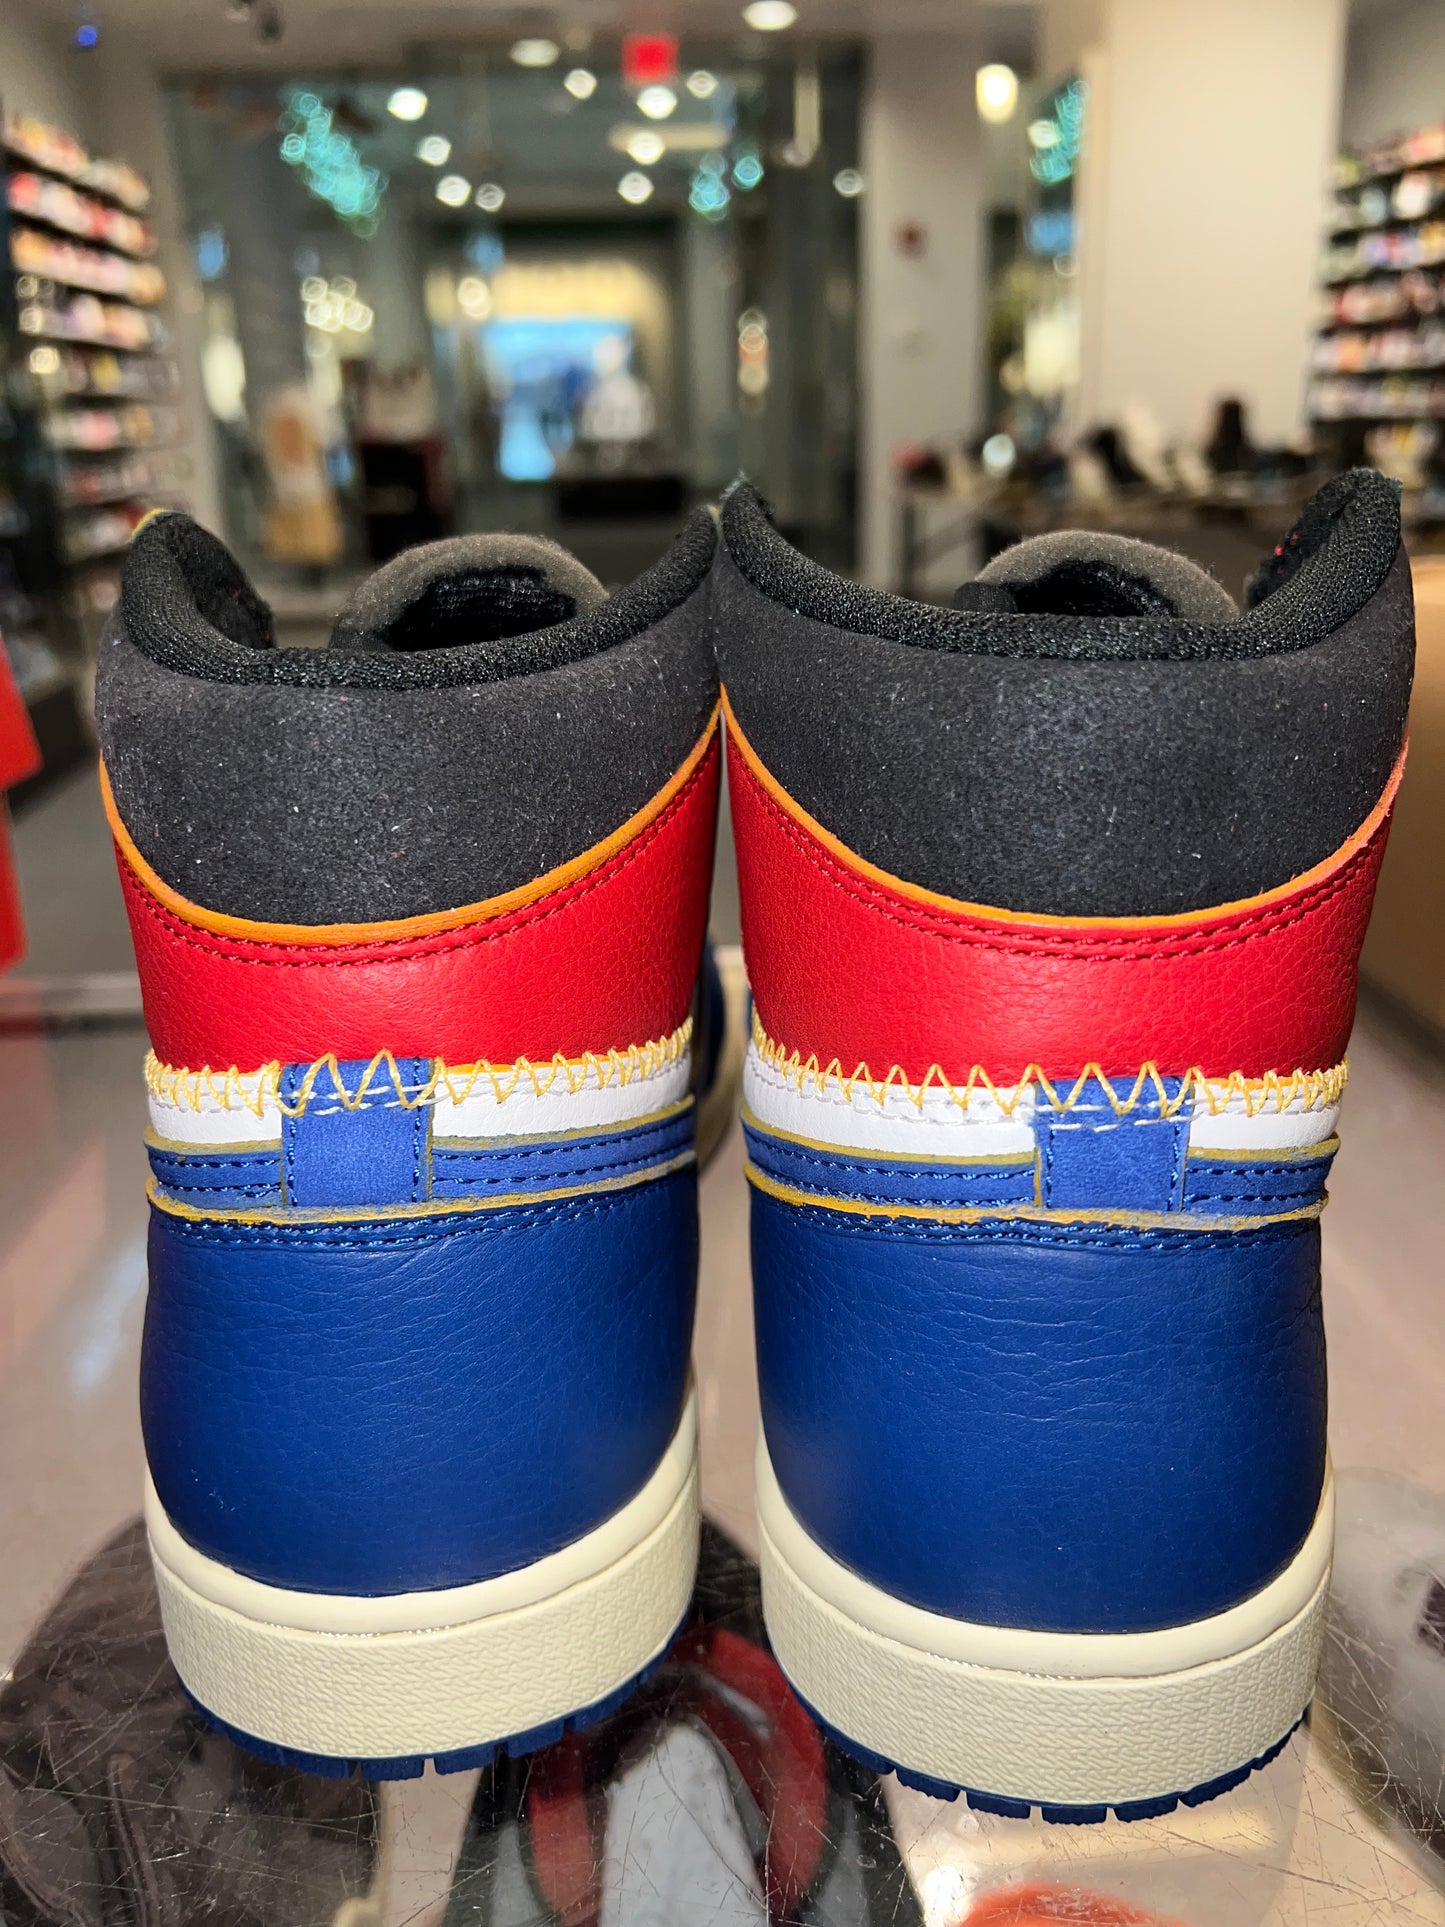 Size 8.5 Air Jordan 1 “Union Storm Blue” Brand New (Mall)